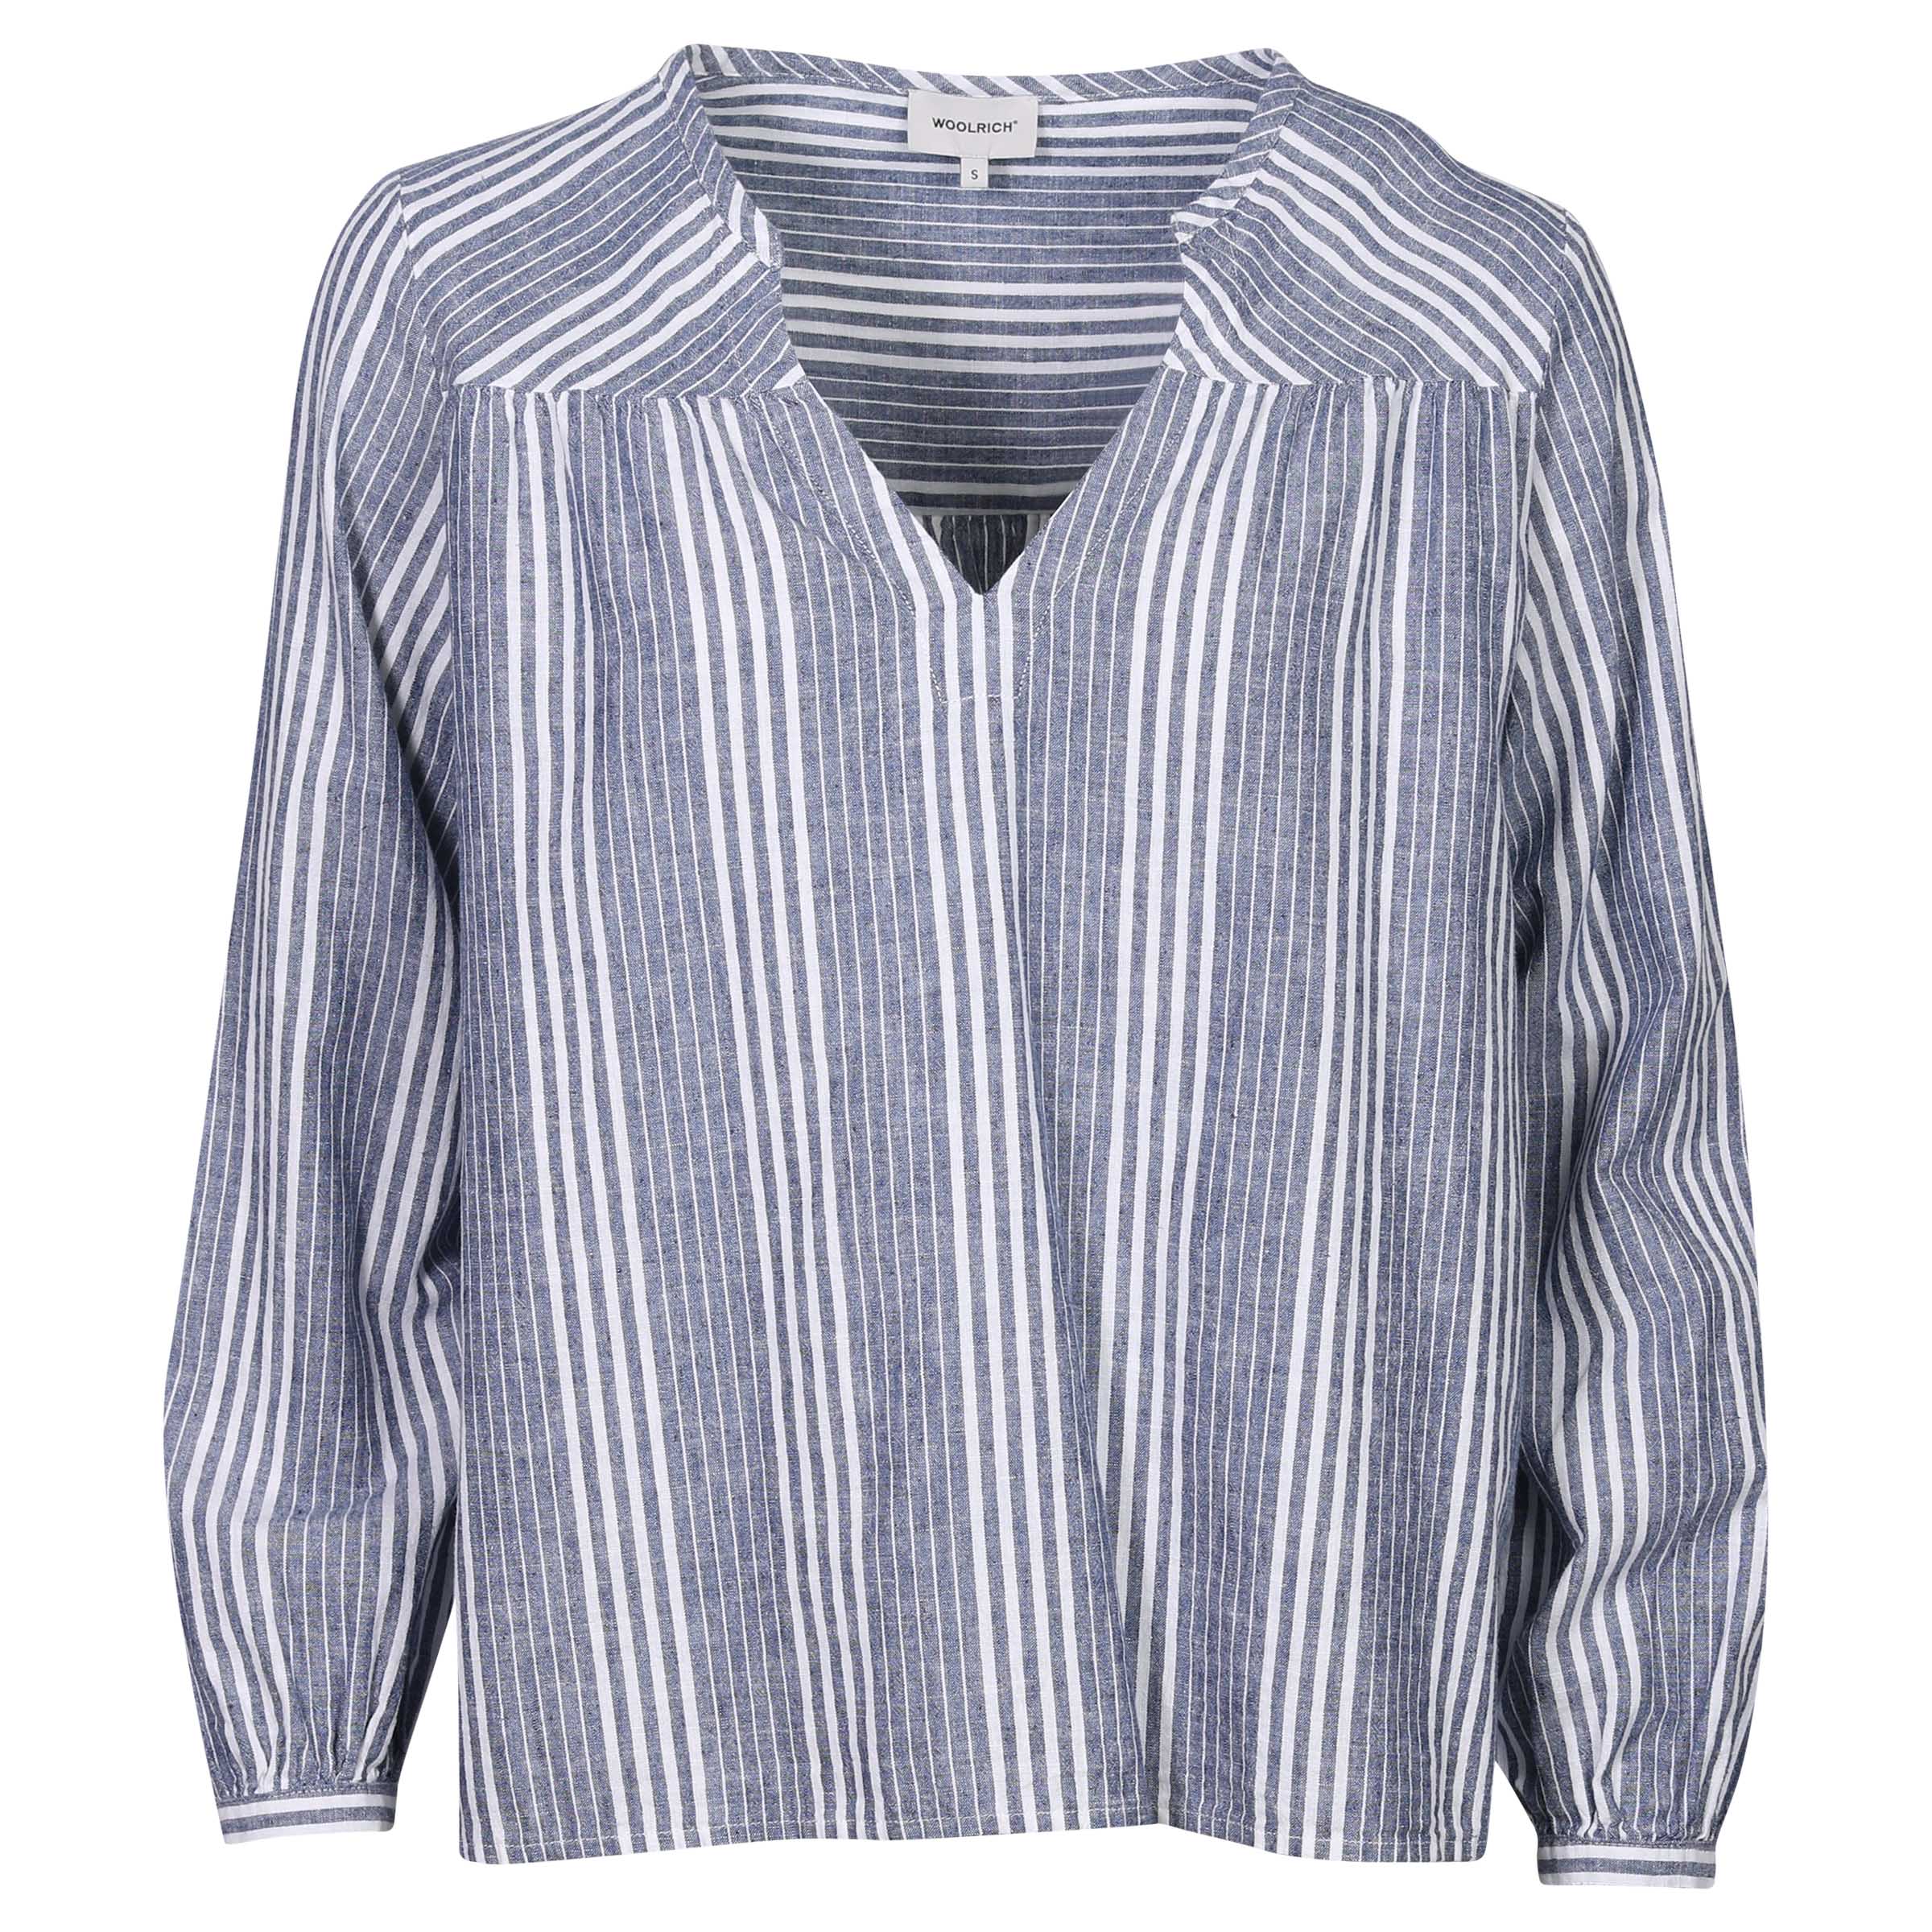 Woolrich Organic Blouse Striped Blue/White